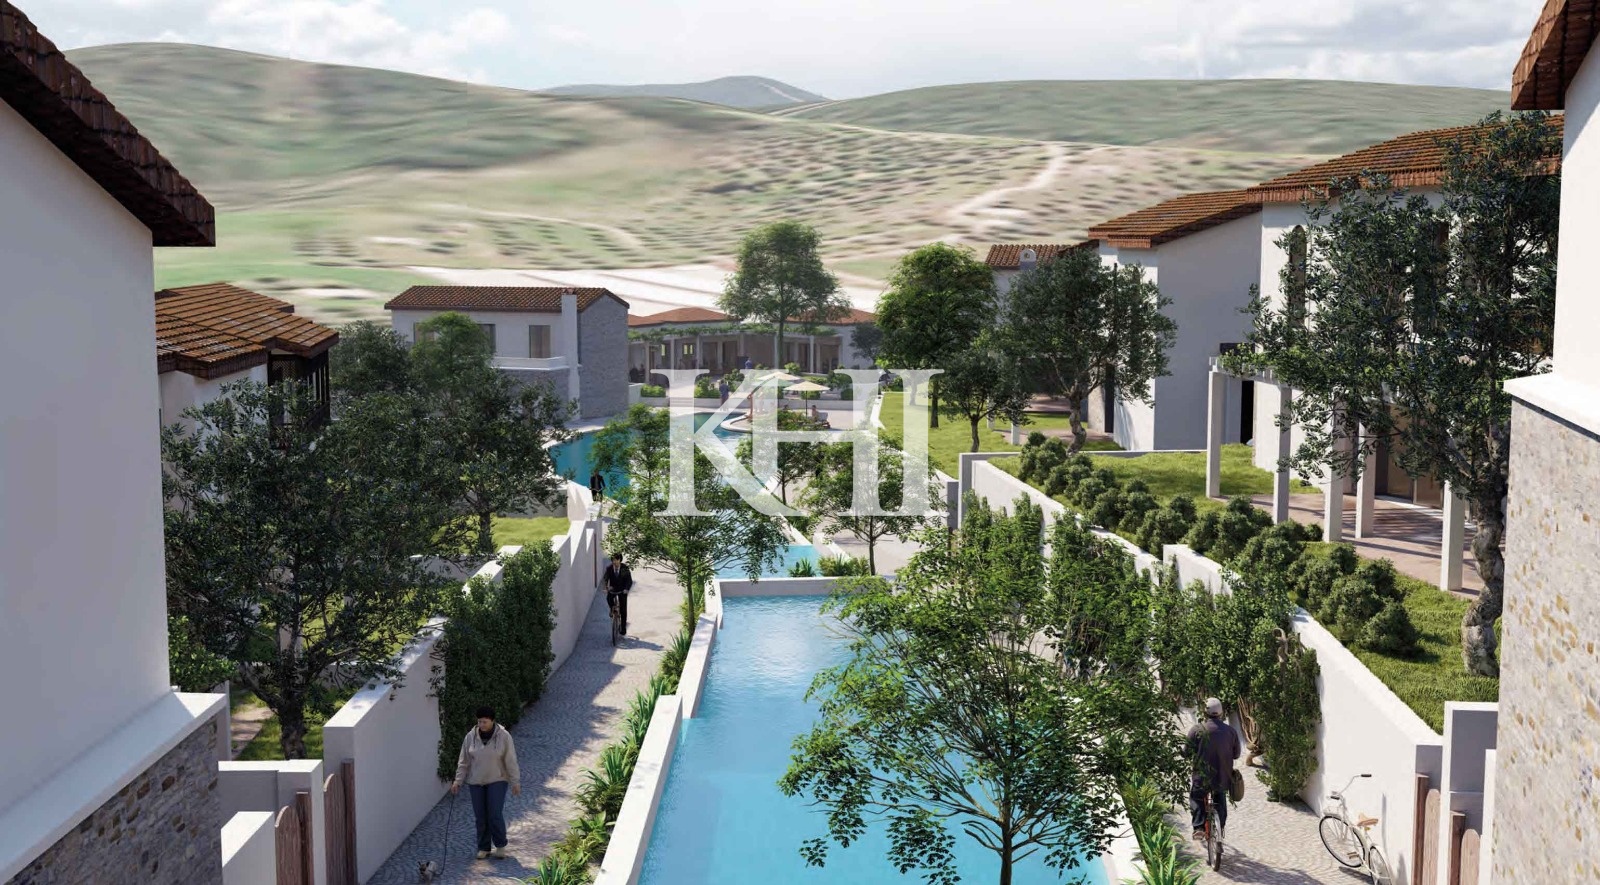 New Villa Project in Bodrum Slide Image 19